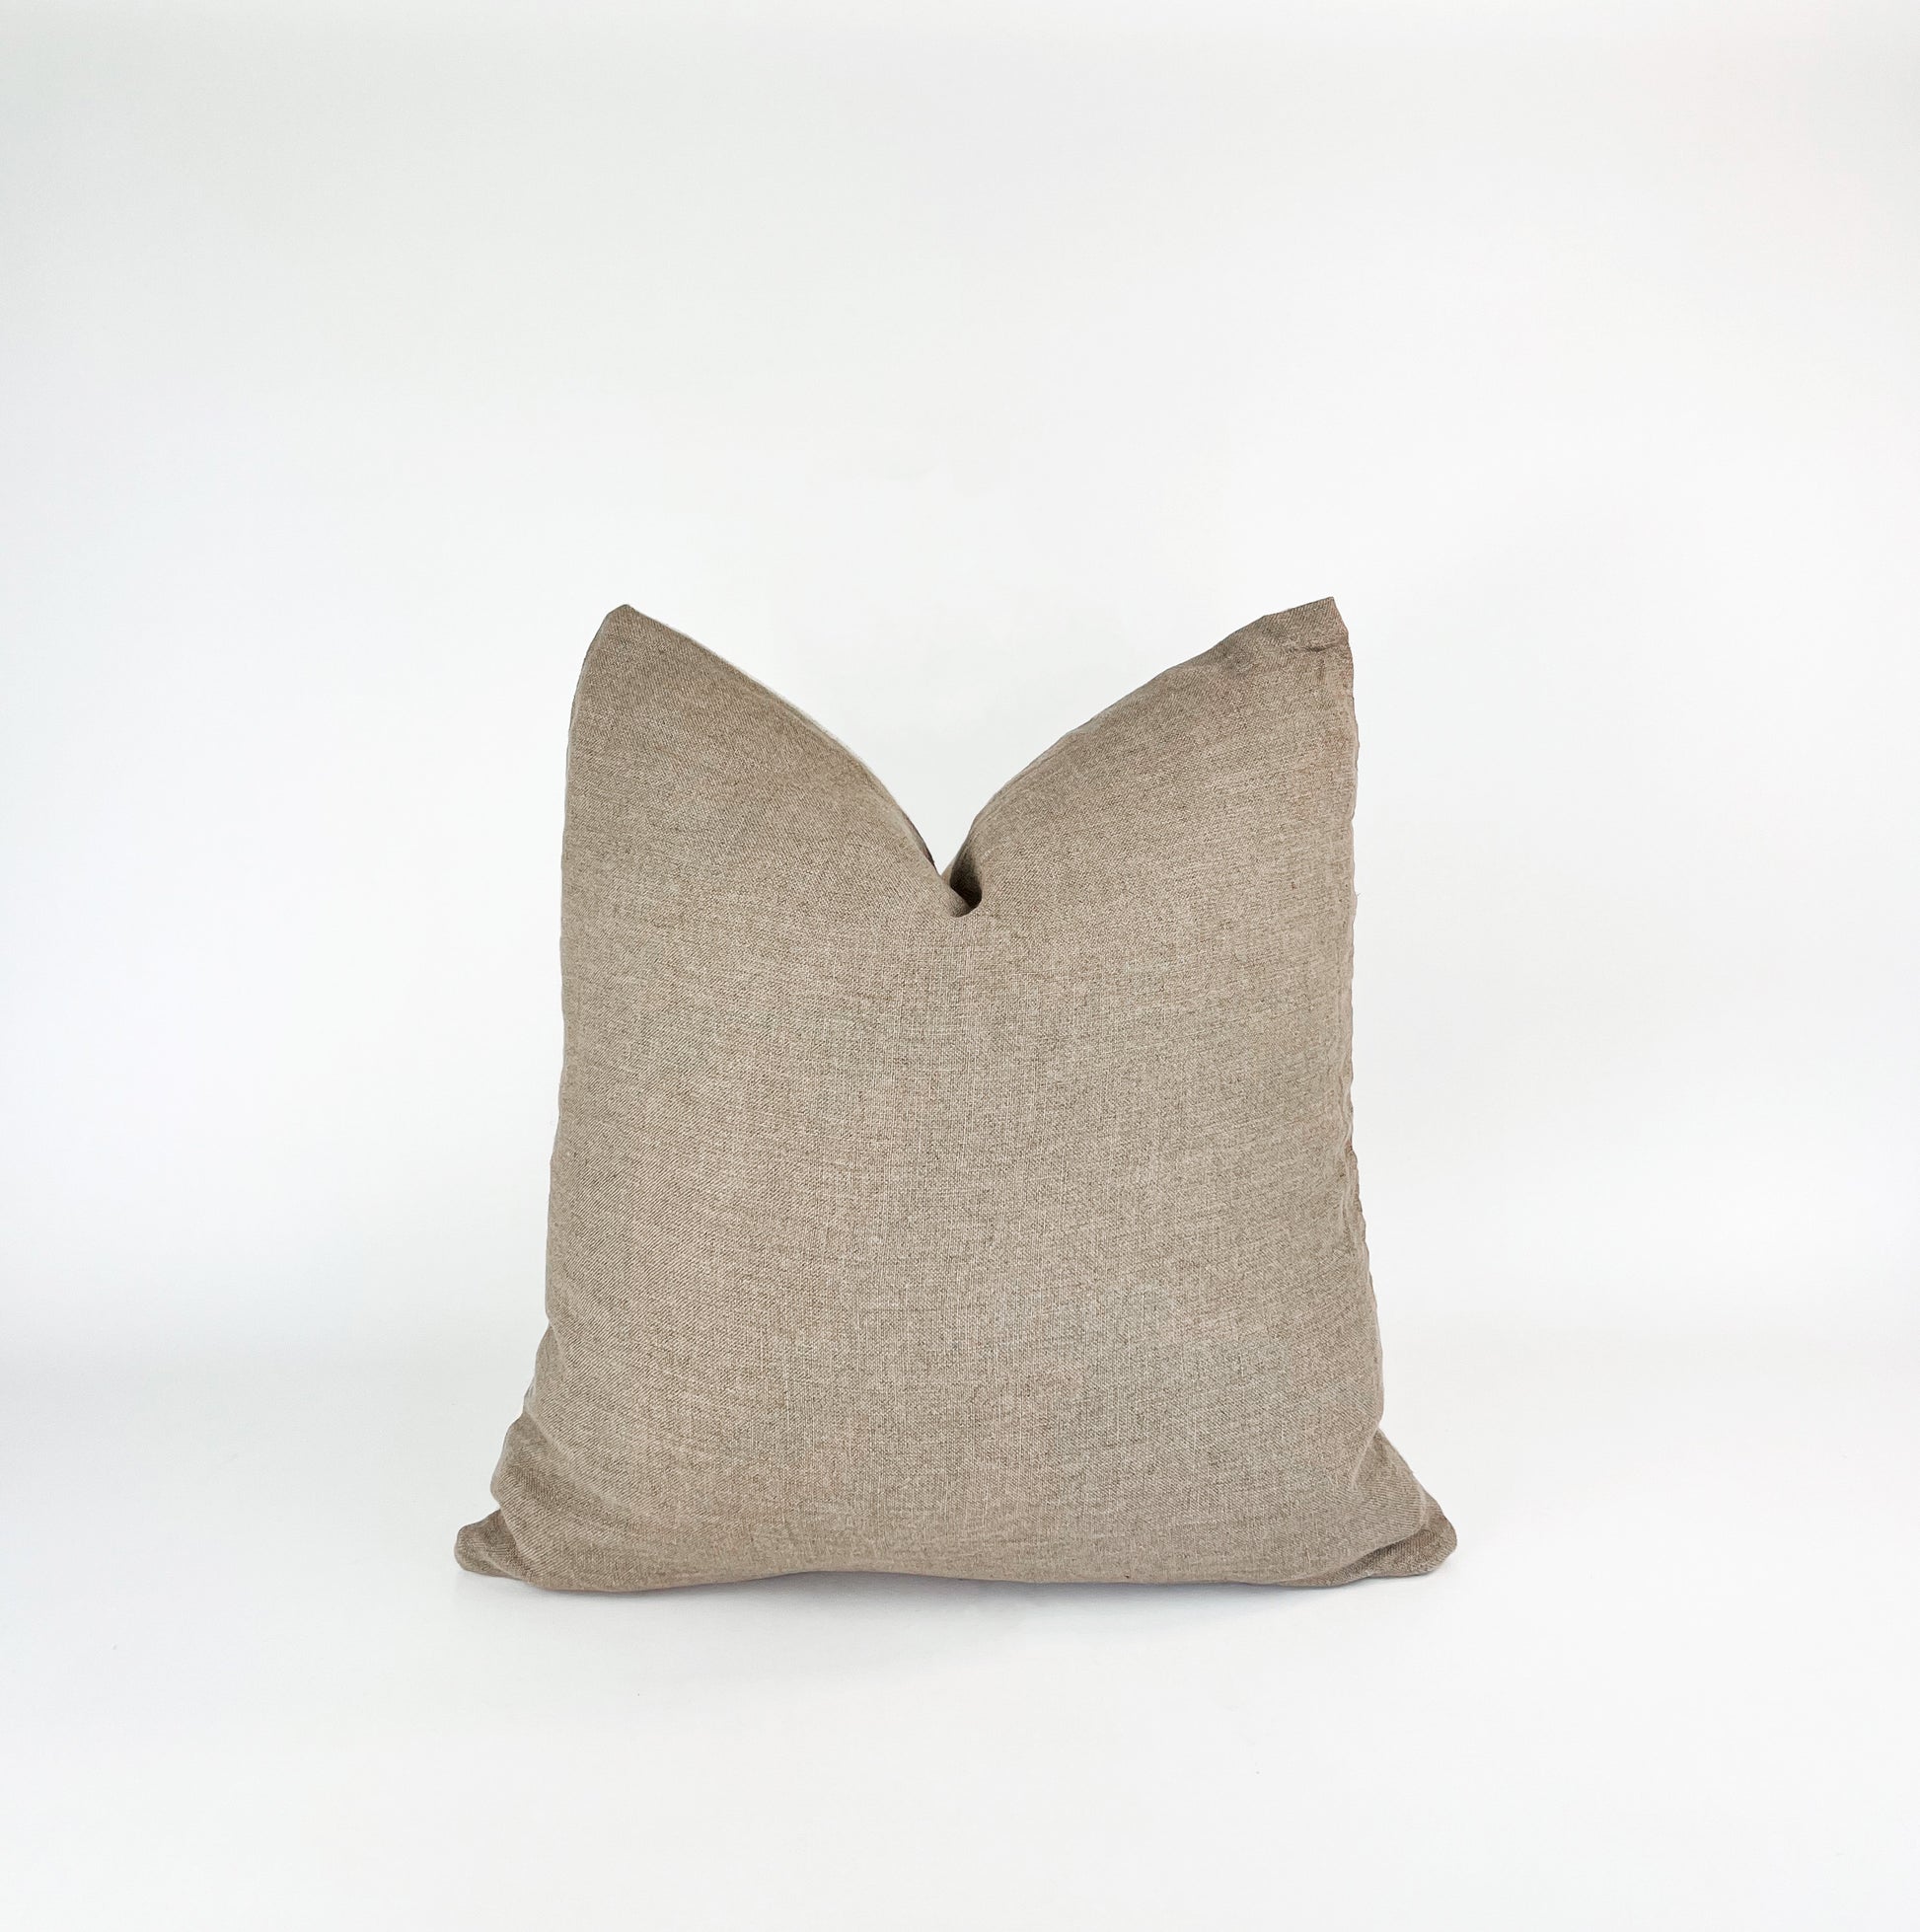 Neutral colored linen throw pillow